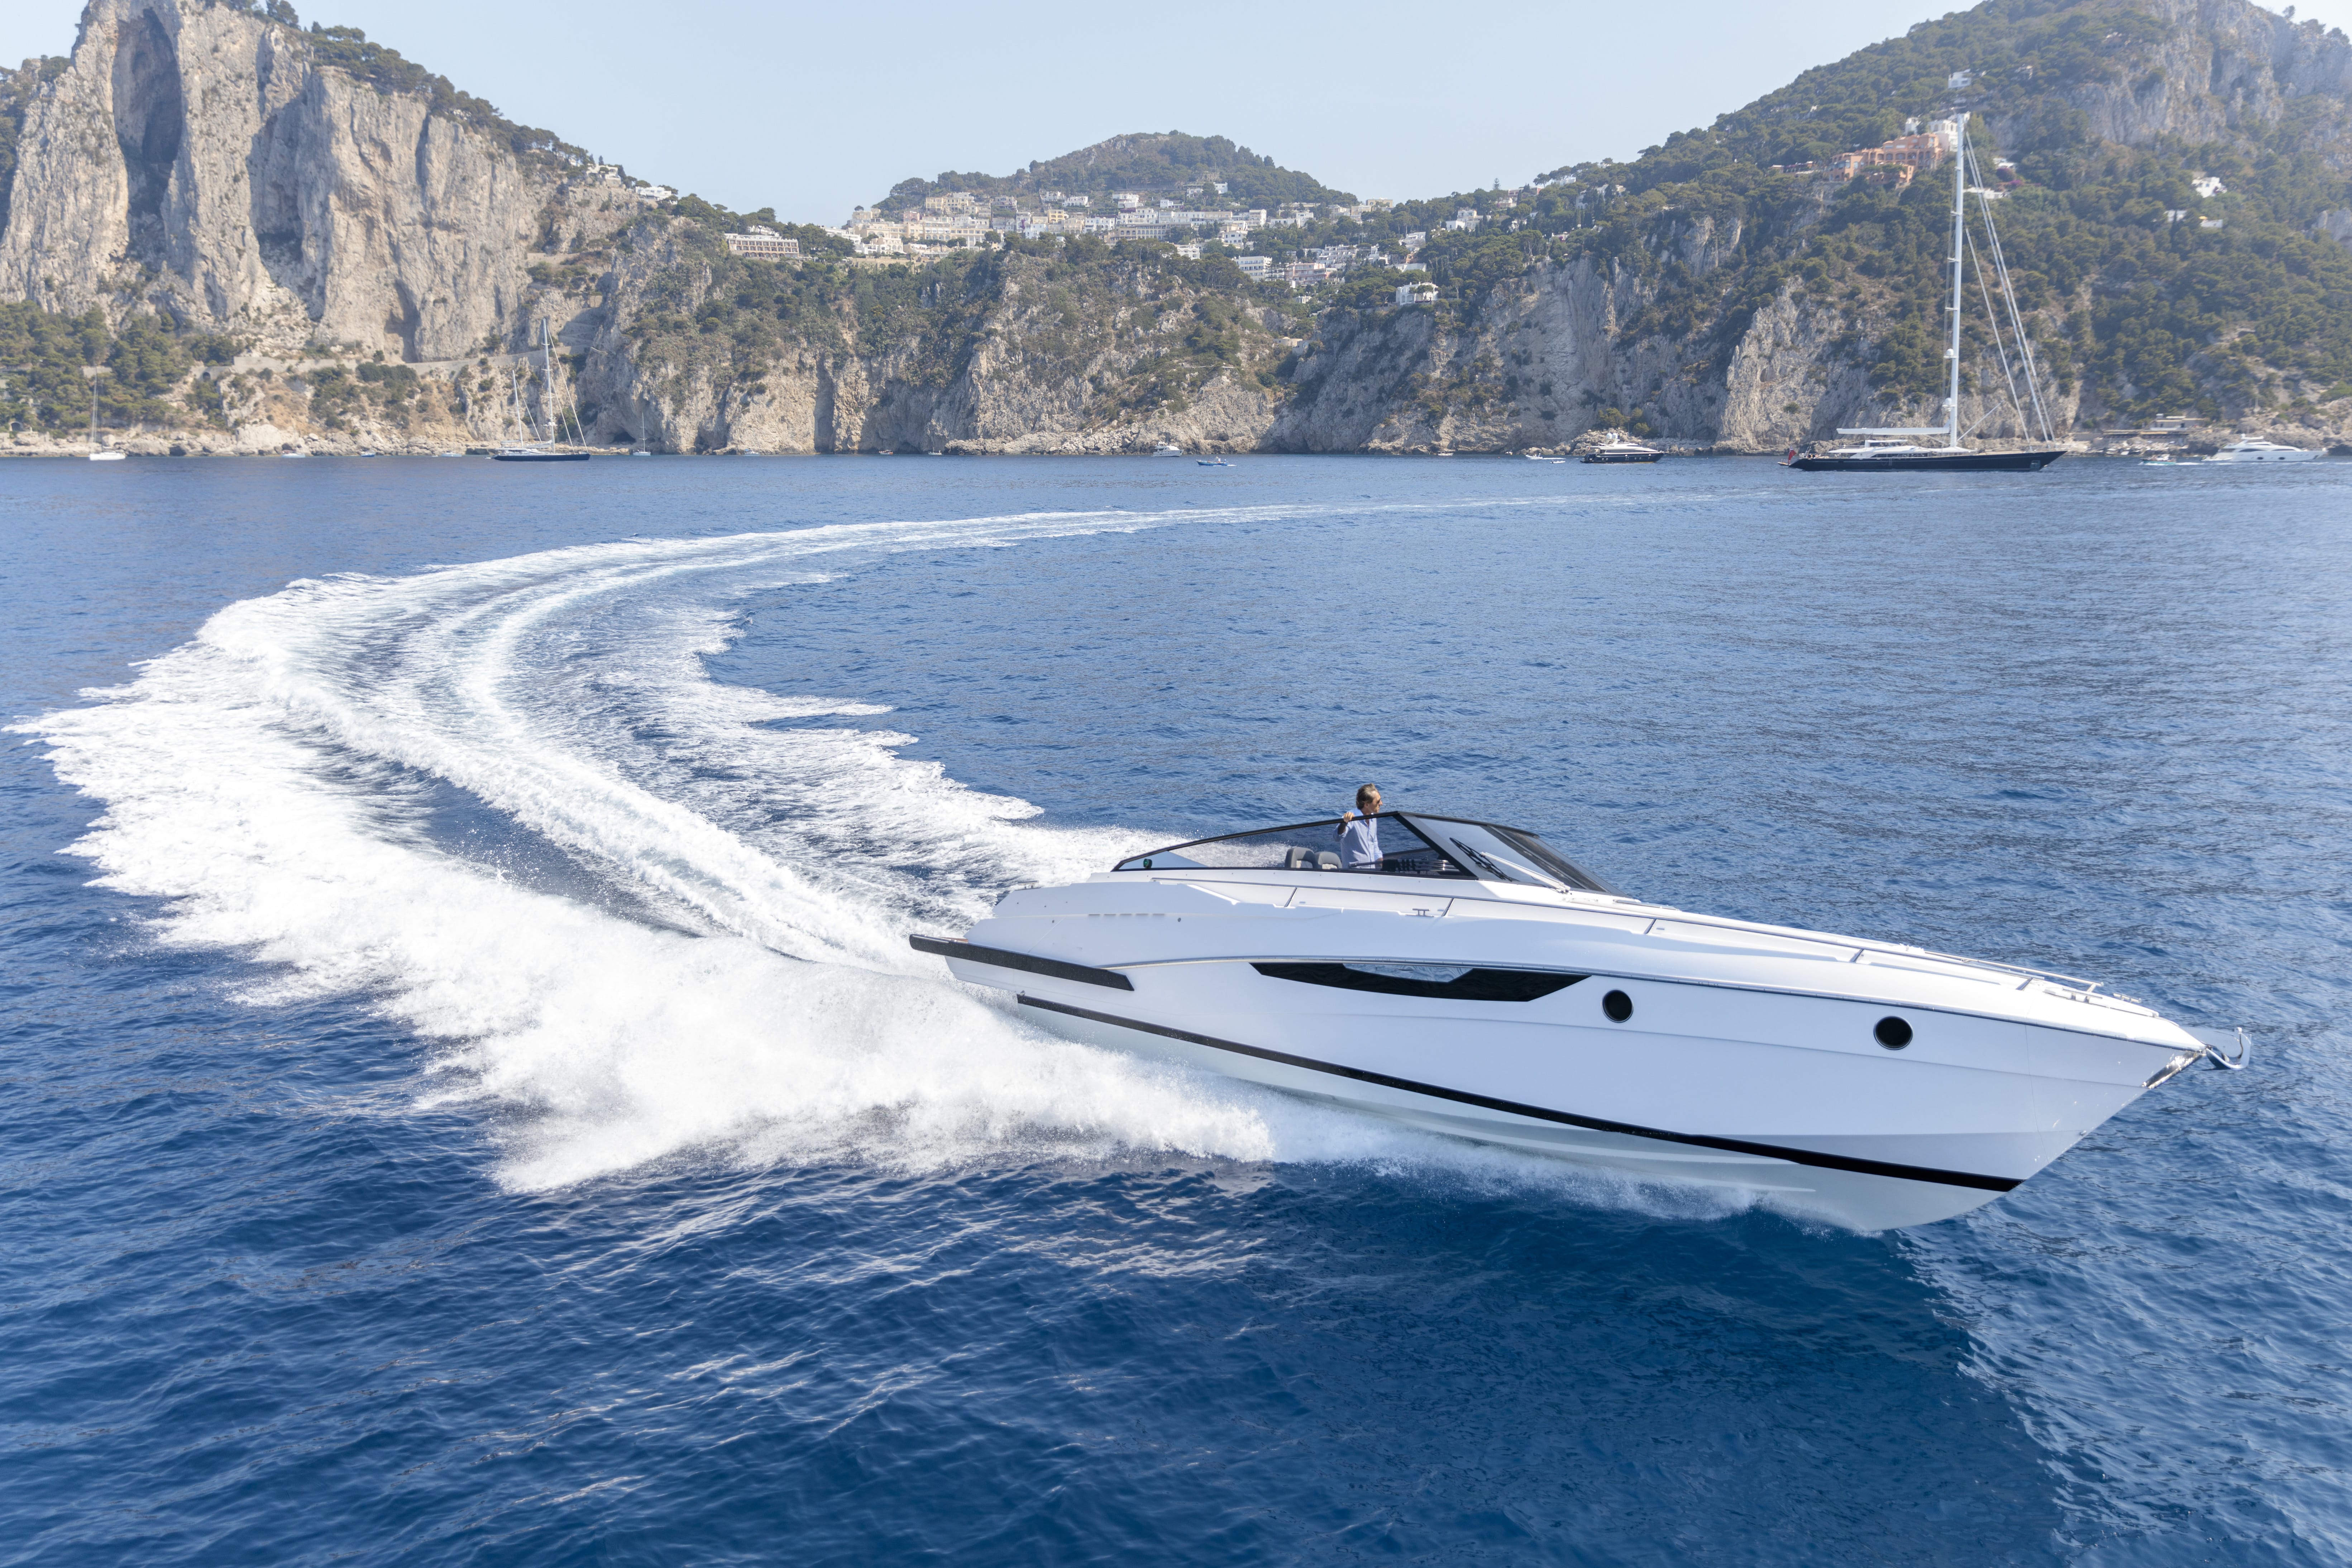 Luxury motor yacht crusing